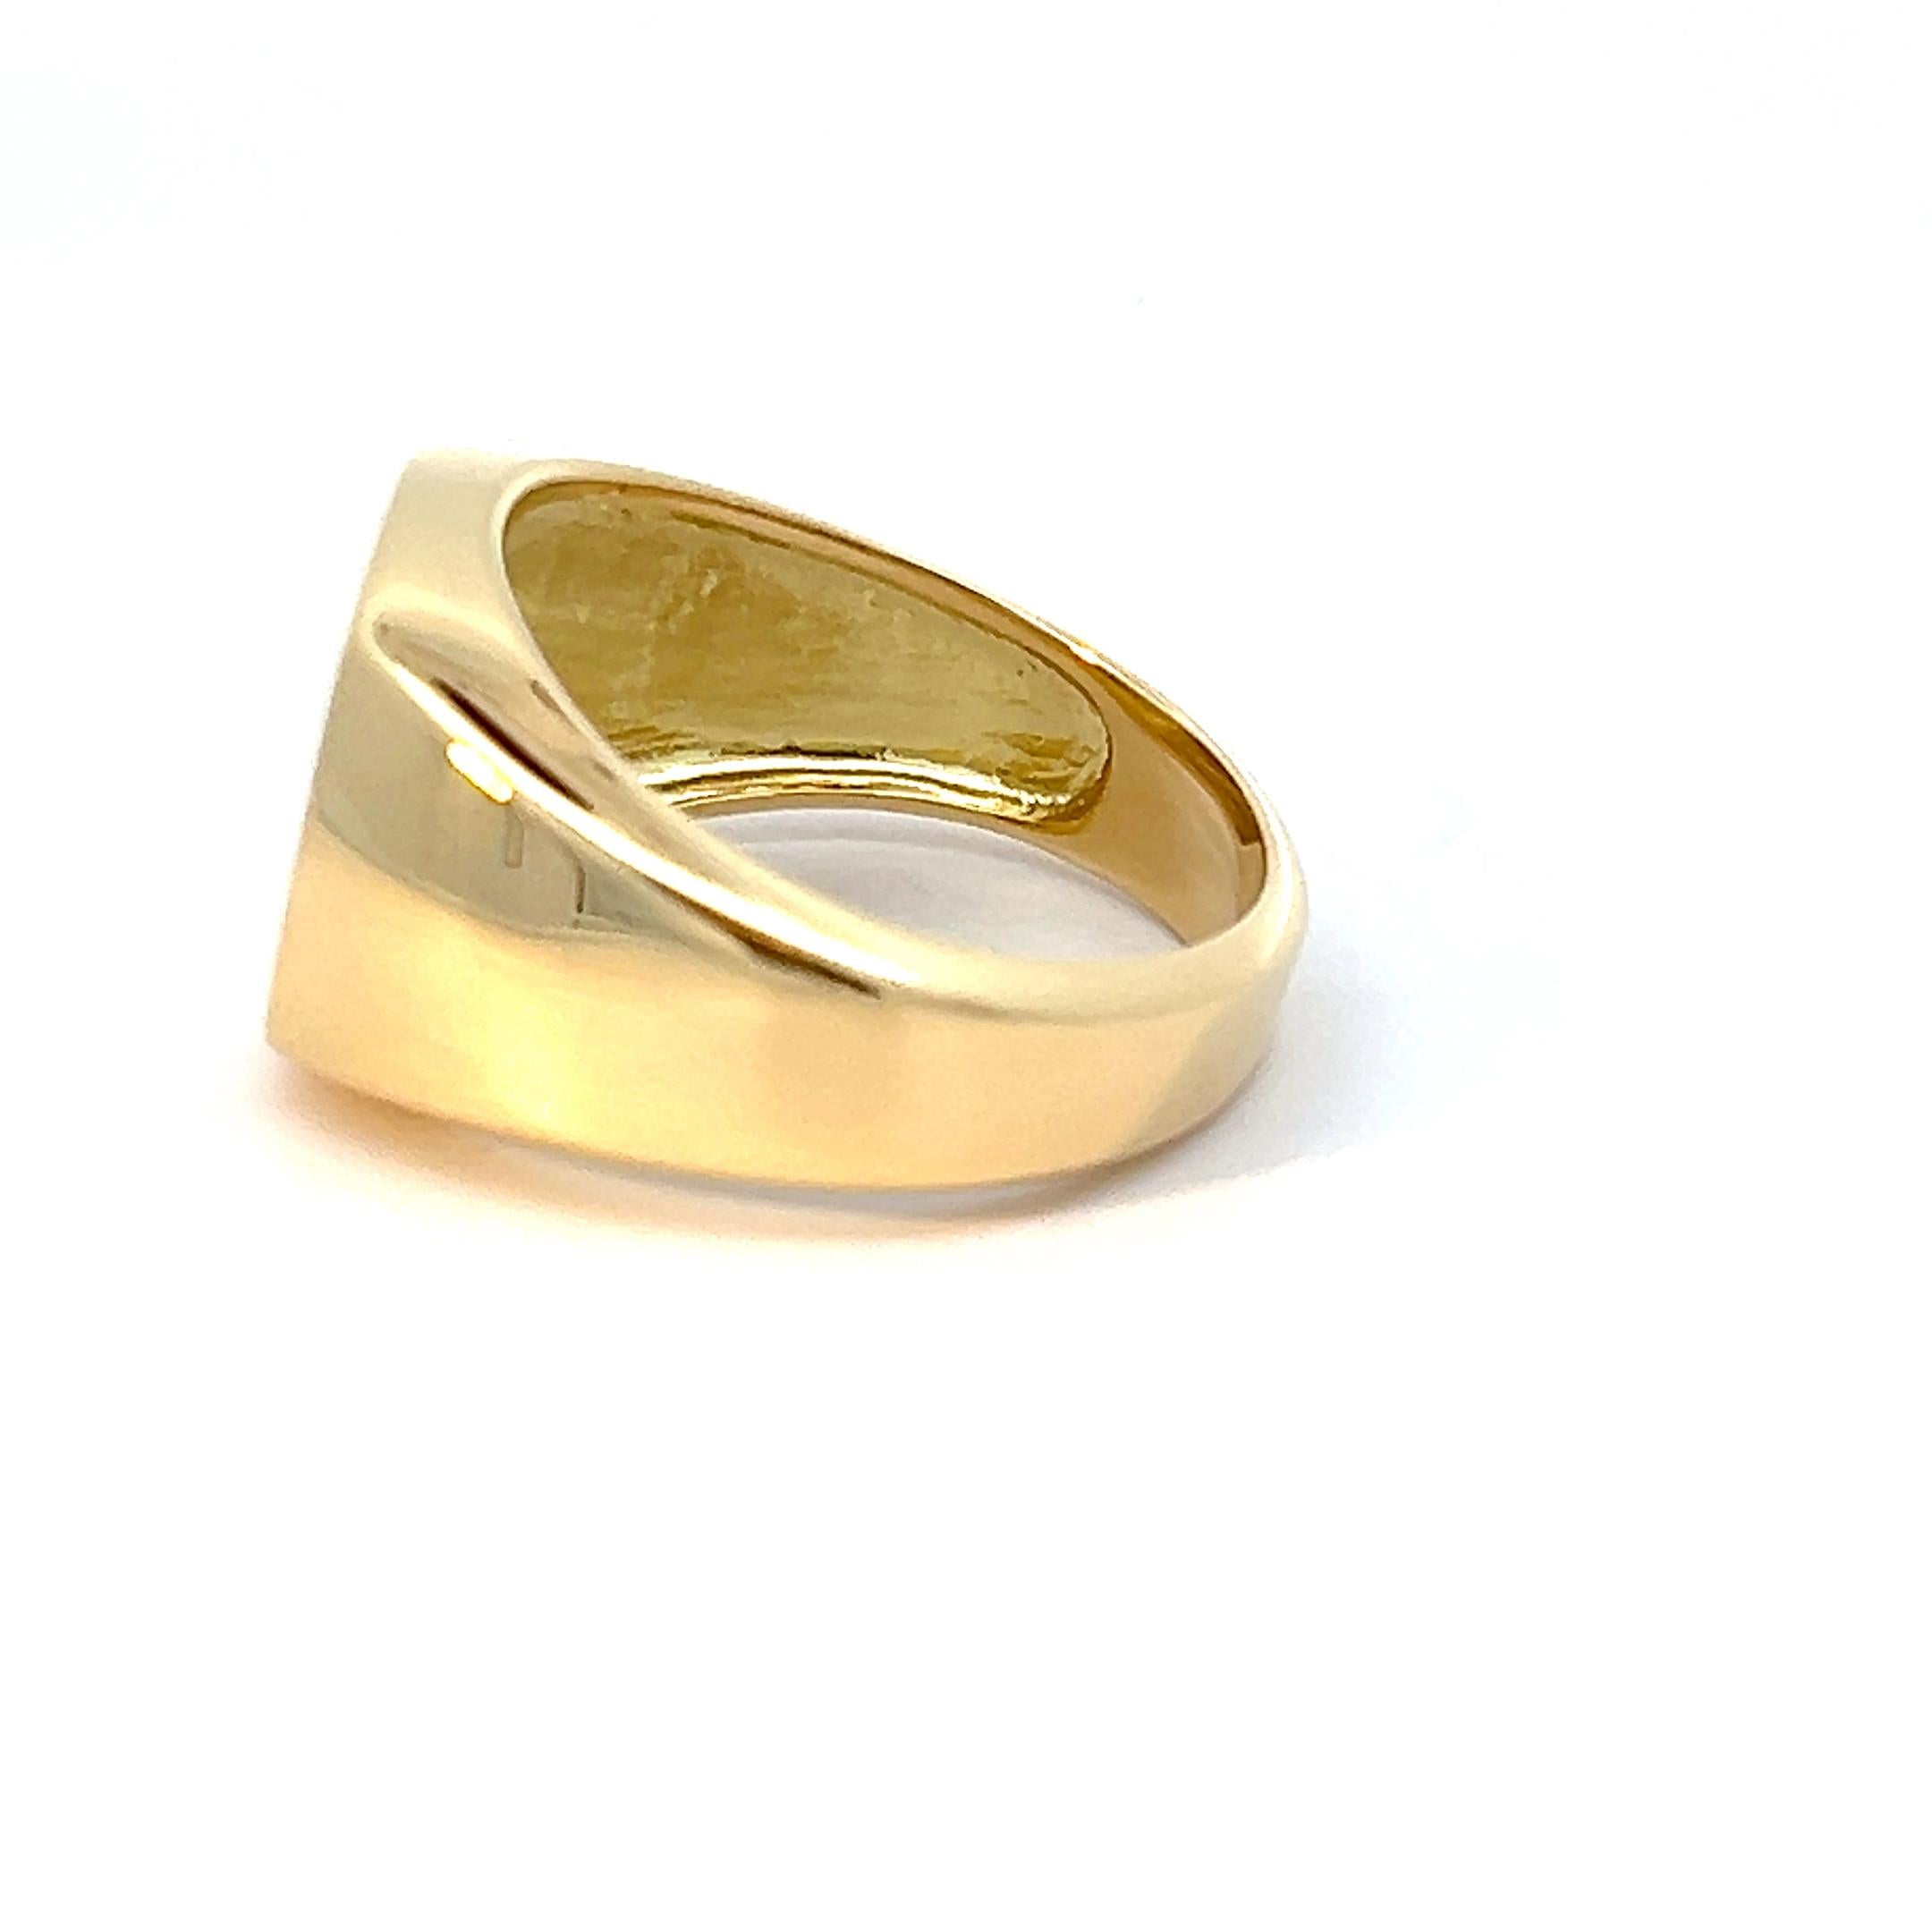 For Sale:  Lois D. Sasson Design 18k Yellow Gold Men's Signet Ring  4